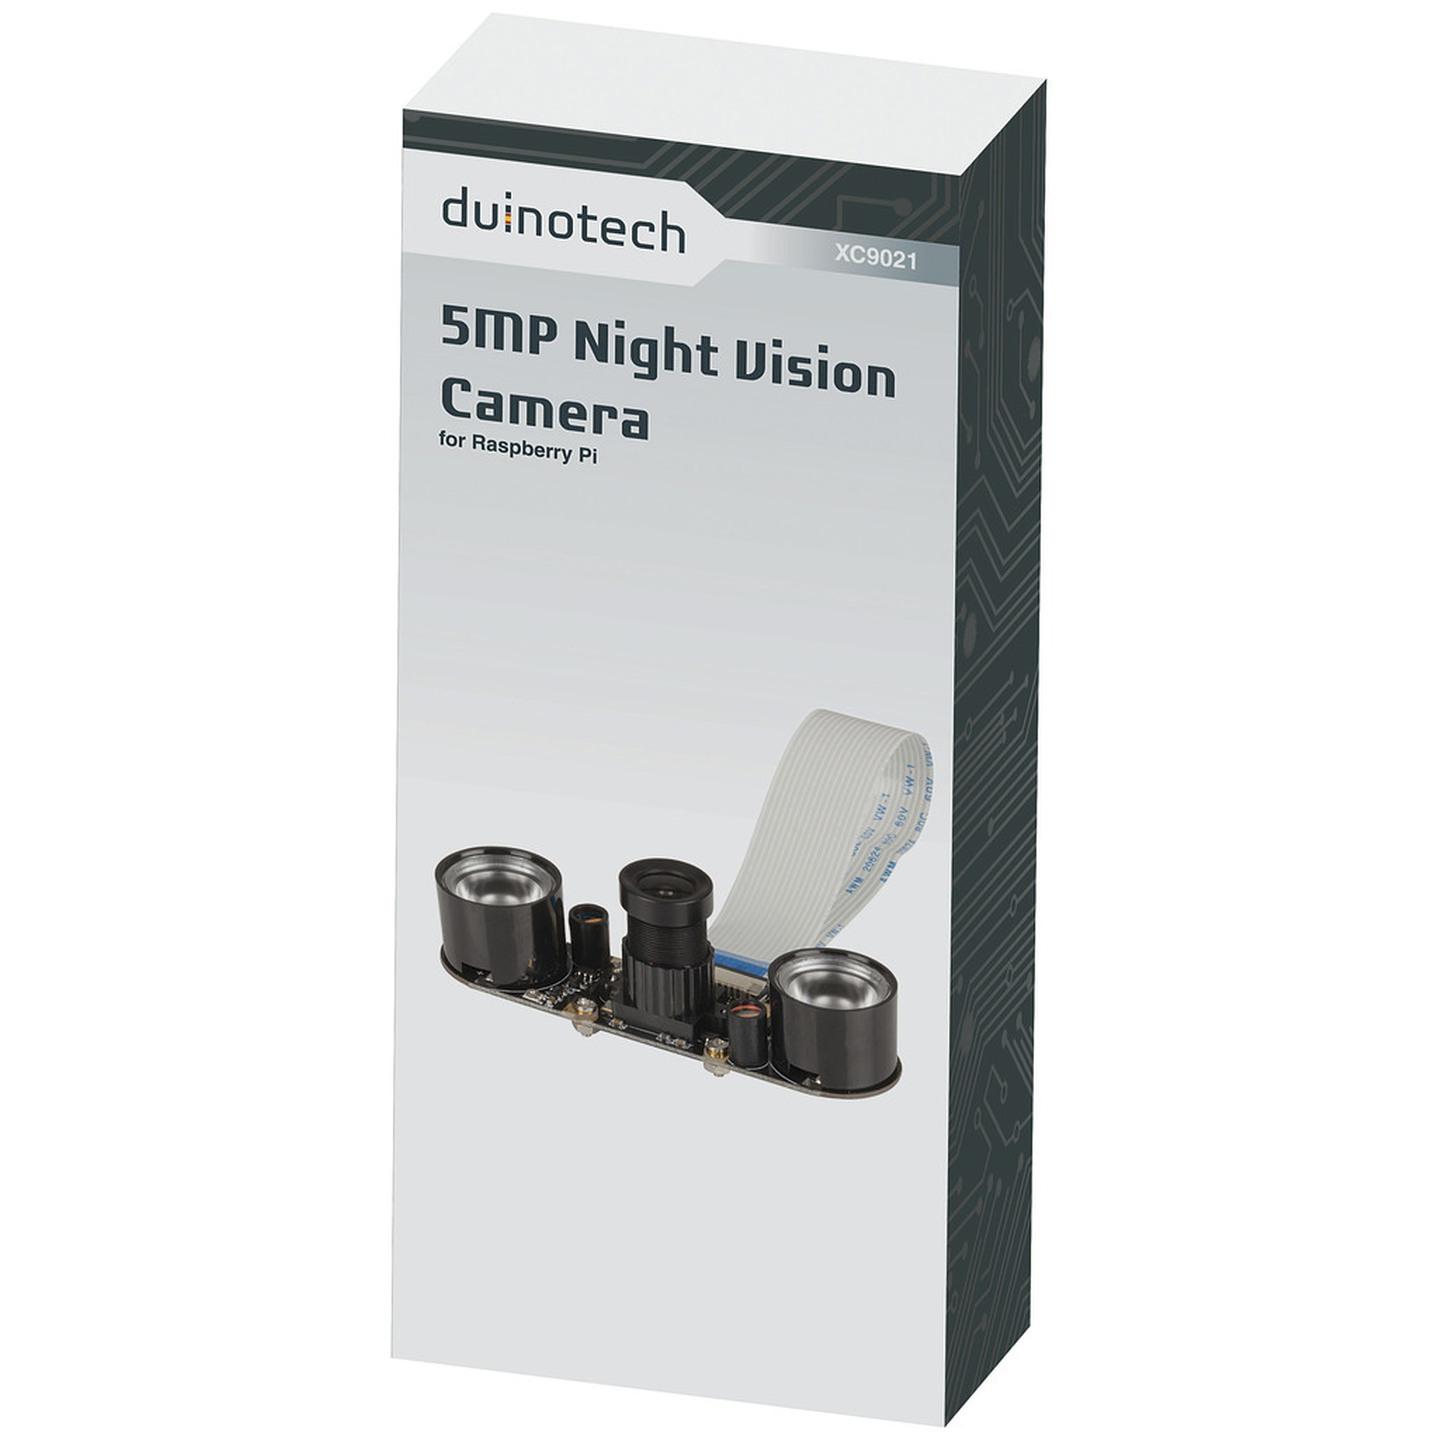 5MP Night Vision Camera - for Raspberry Pi